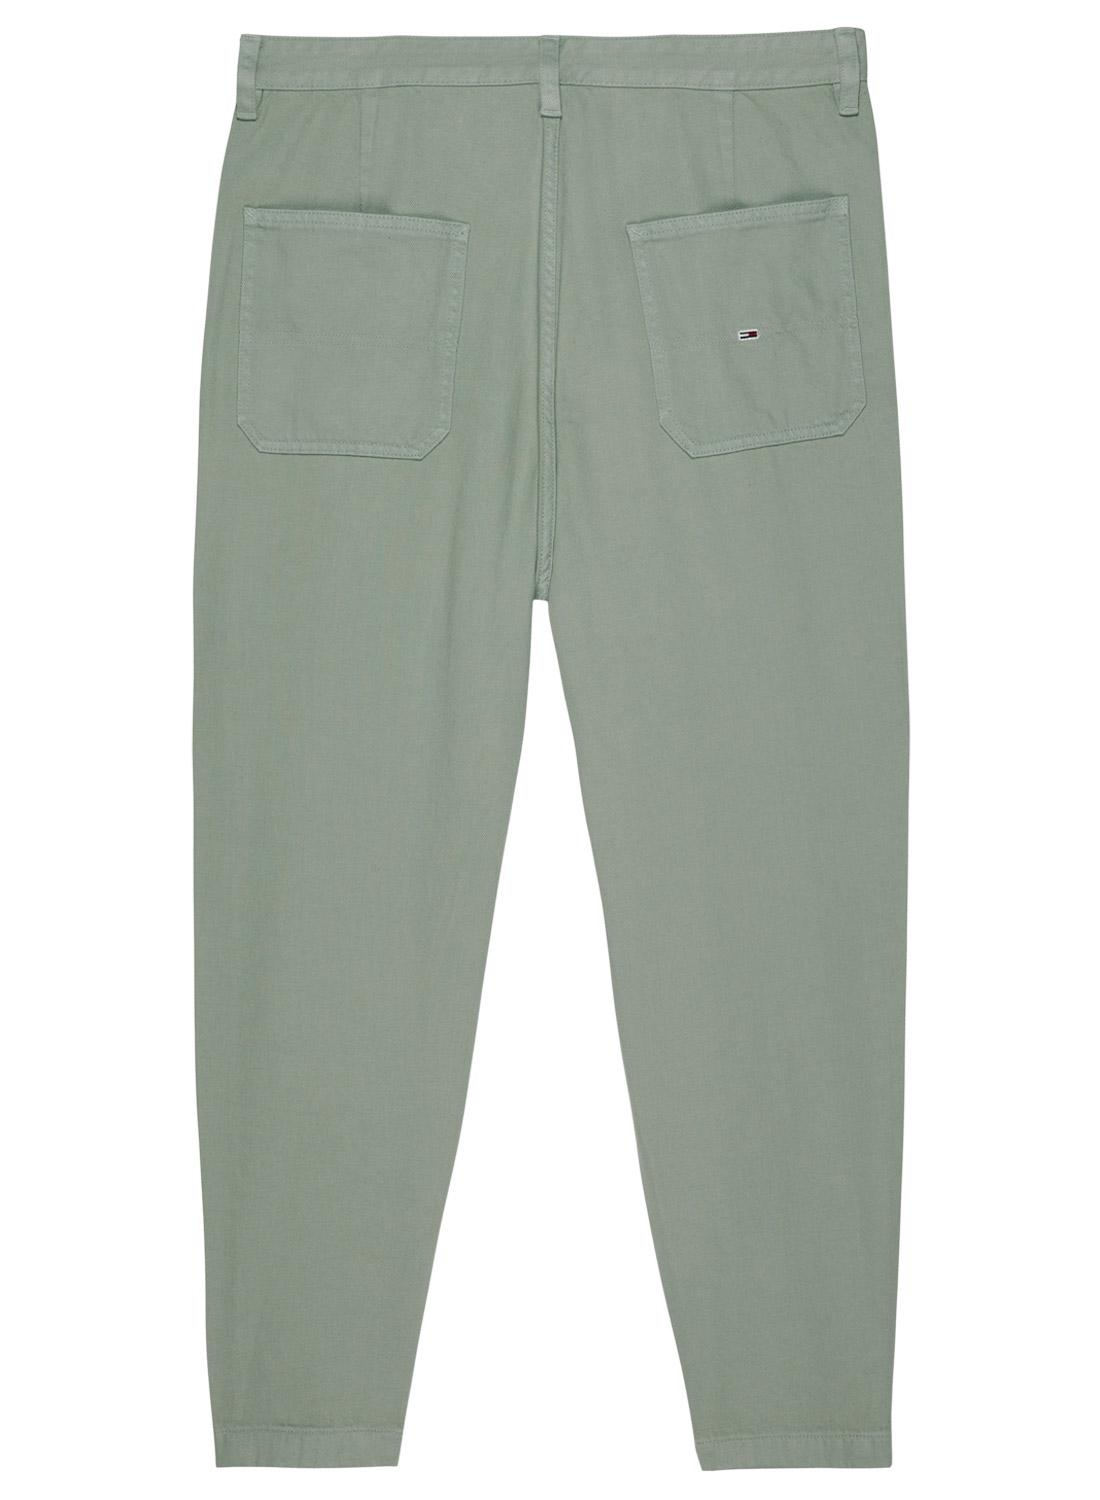 Pantaloni Tommy Jeans Bax Verde per Uomo